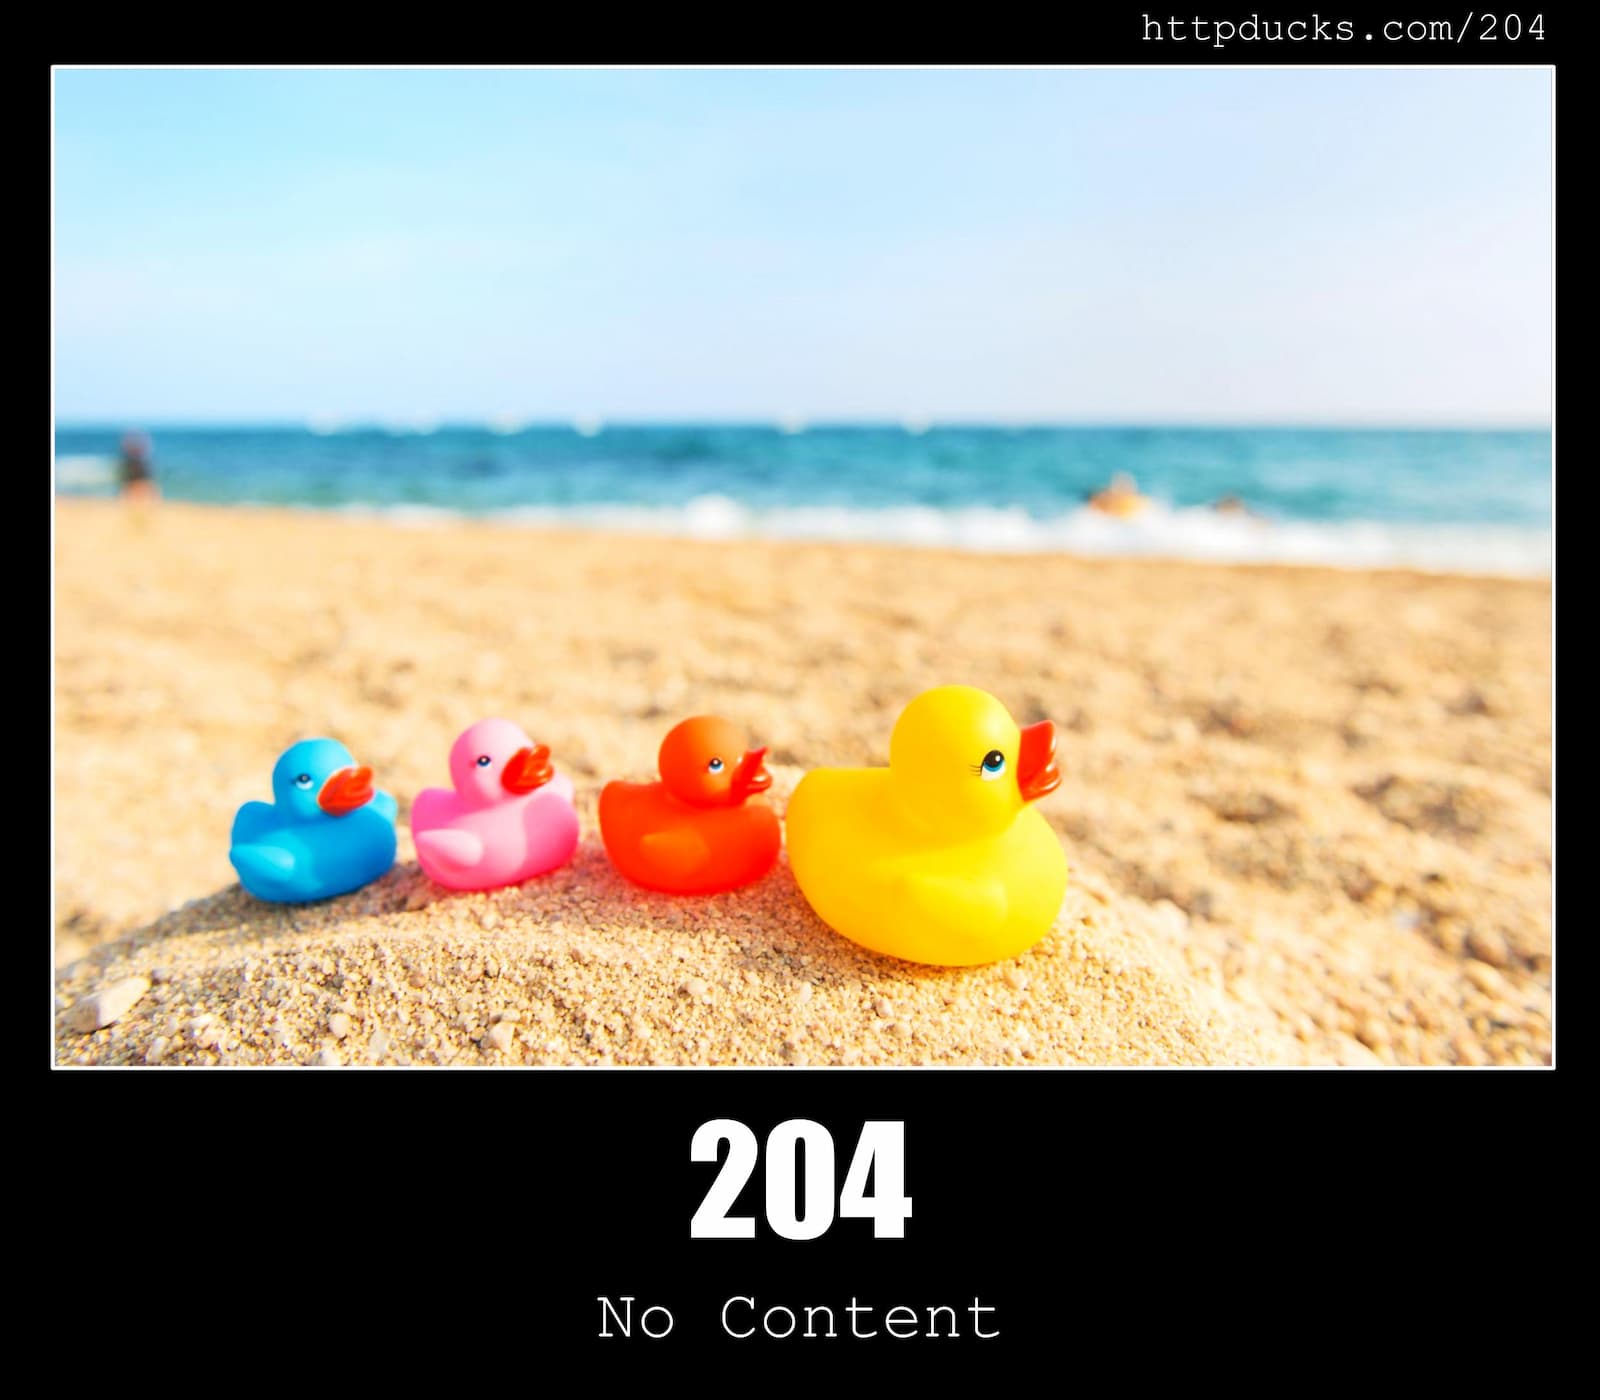 HTTP Status Code 204 No Content & Ducks